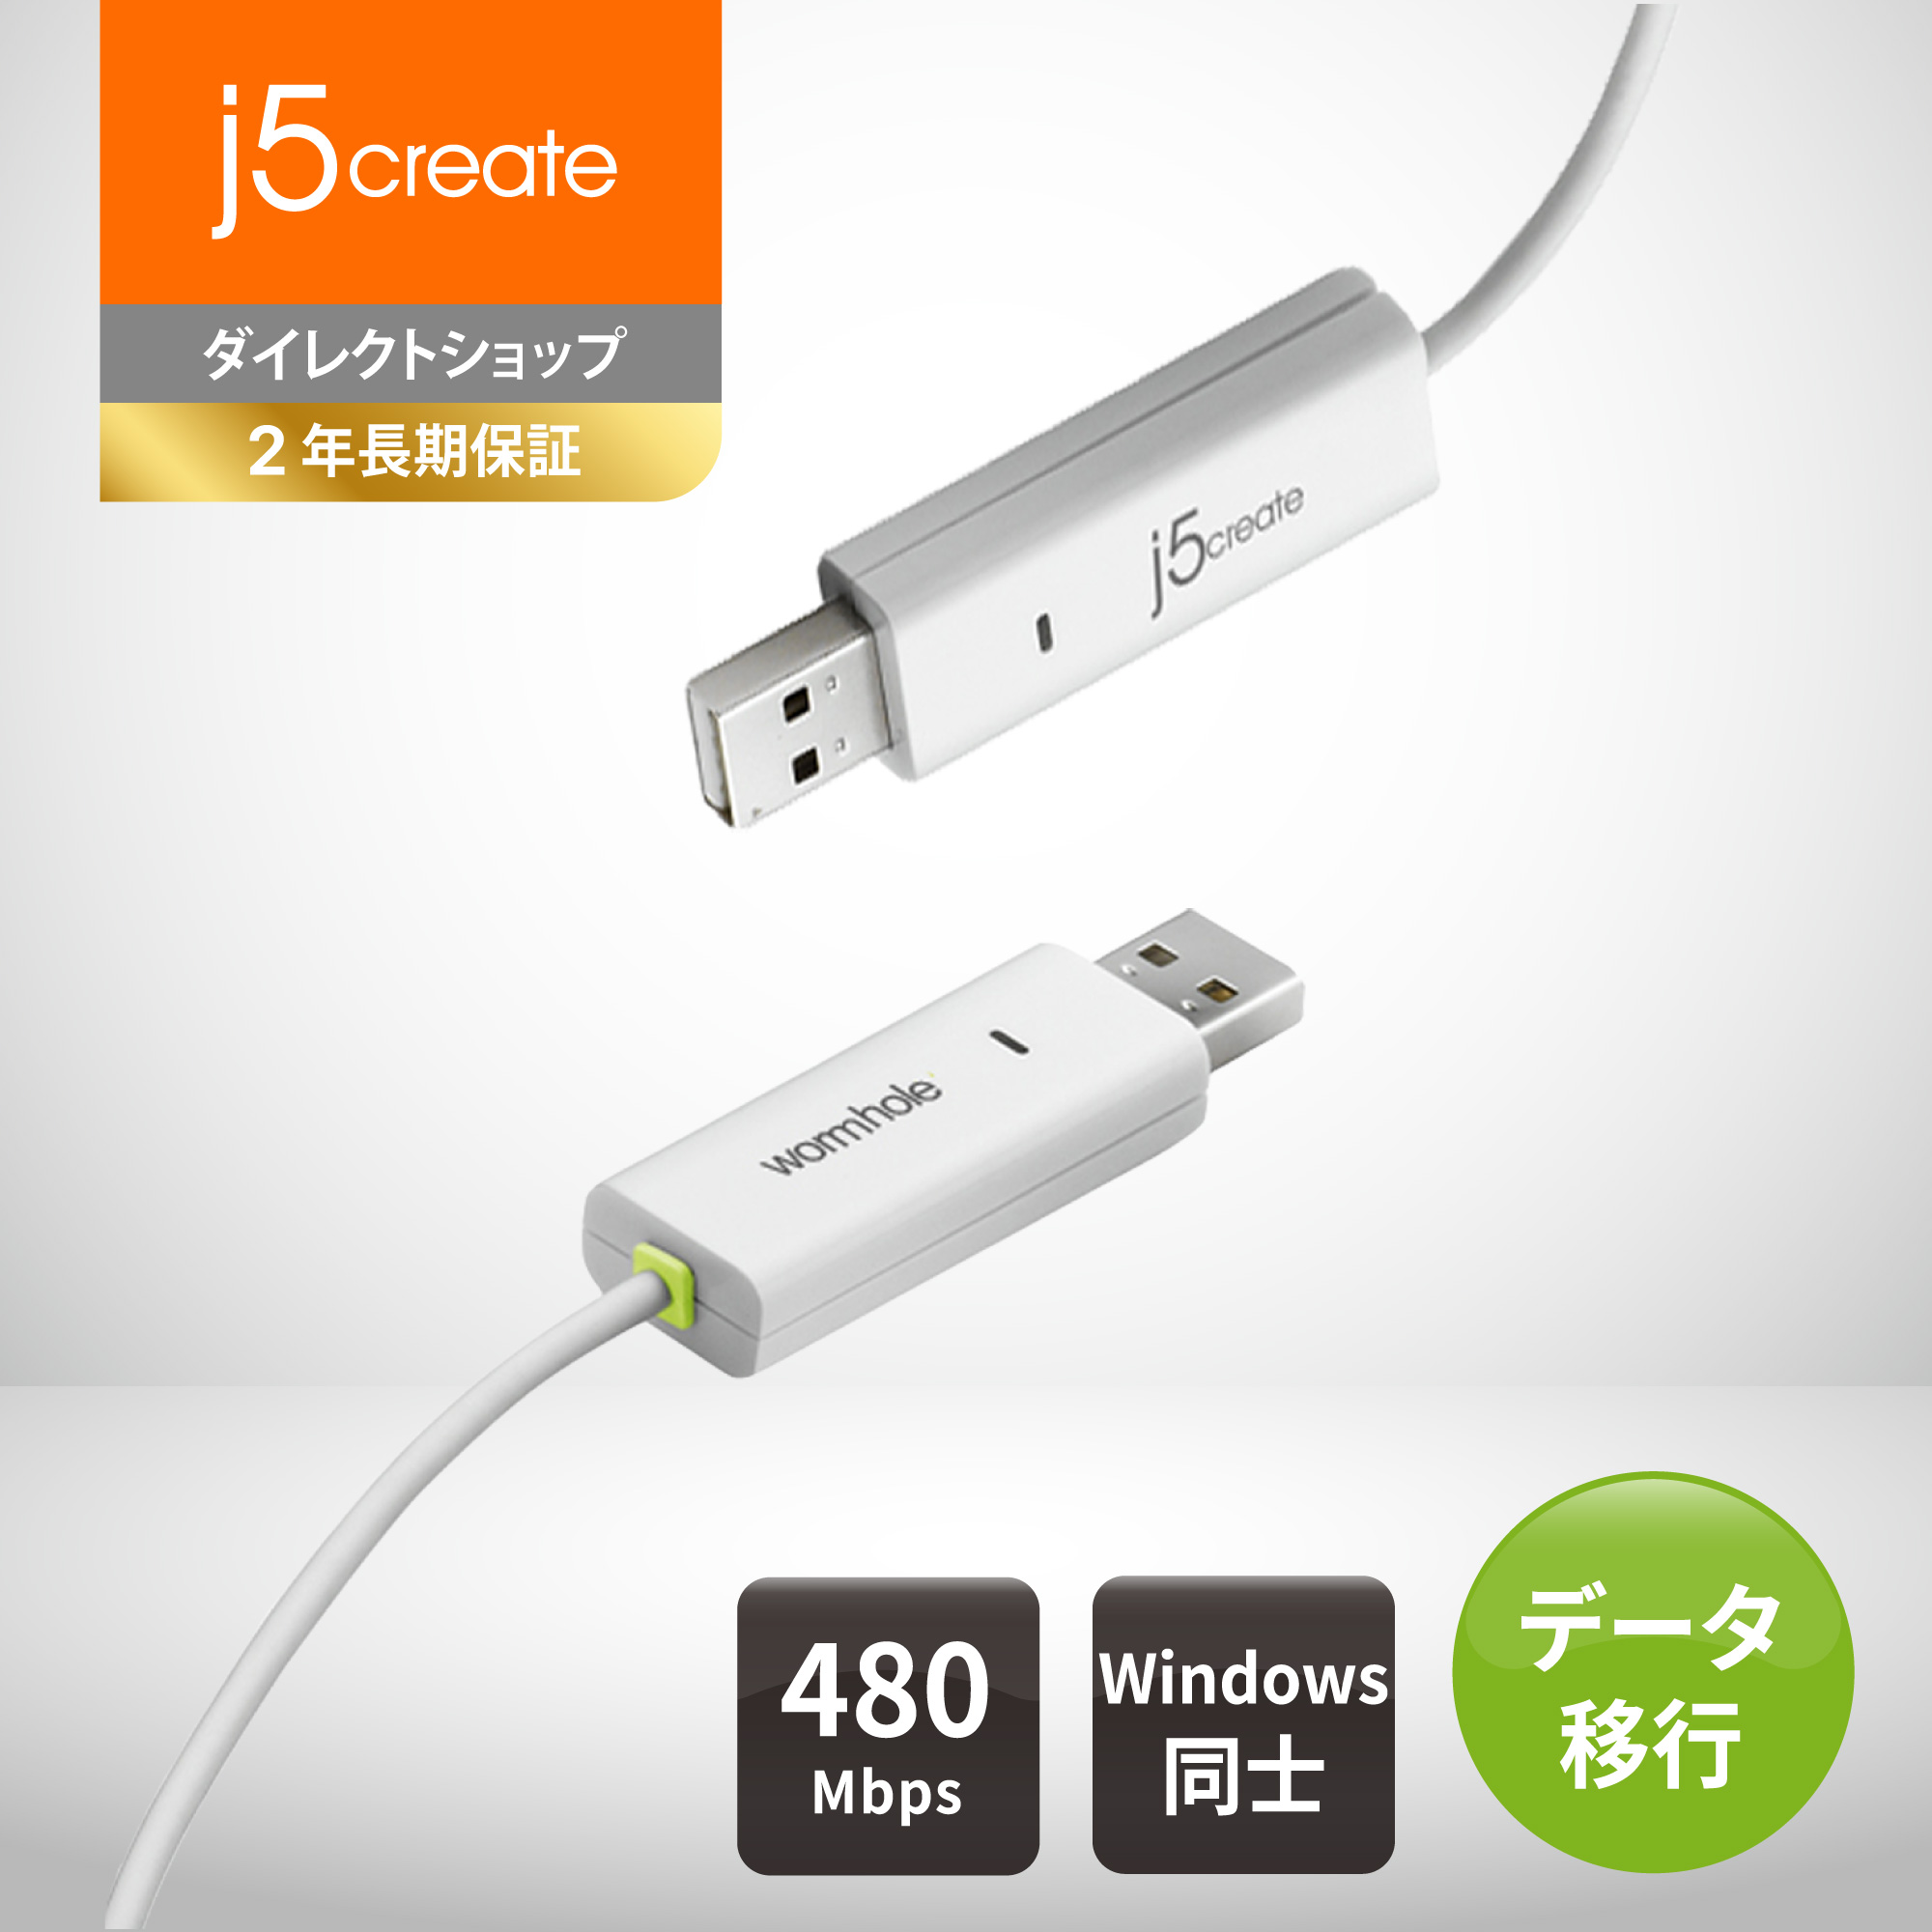 j5 create リンクケーブル USB2.0 WORMHOLE SWITCH 1.8m JUC100-EJ  データ転送速度480Mb S Windows 7以降対応